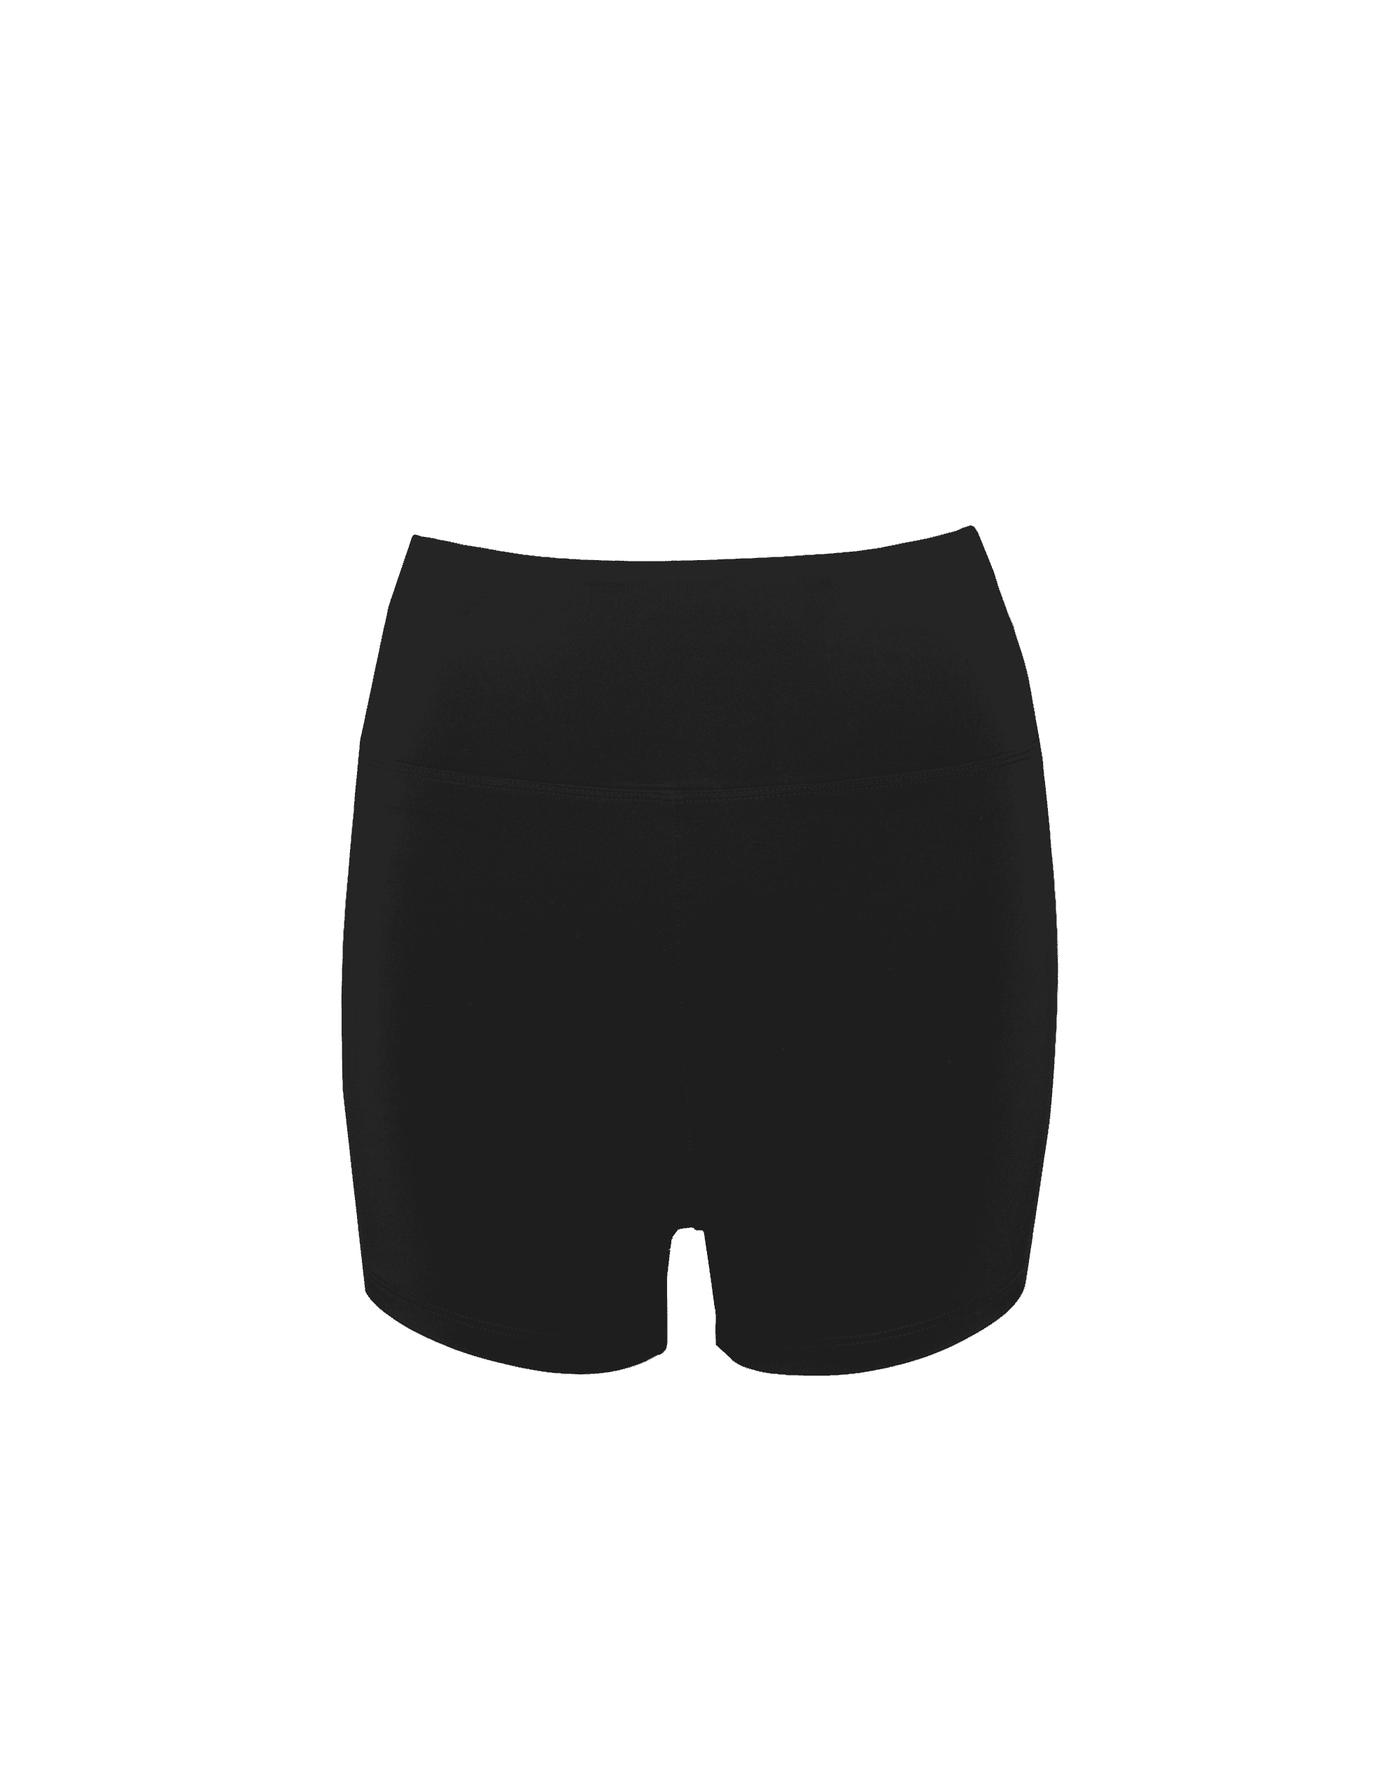 Starboard Swim Shorts (Black) - High Waisted Swim Shorts - Women's Swim - Charcoal Clothing mix-and-match